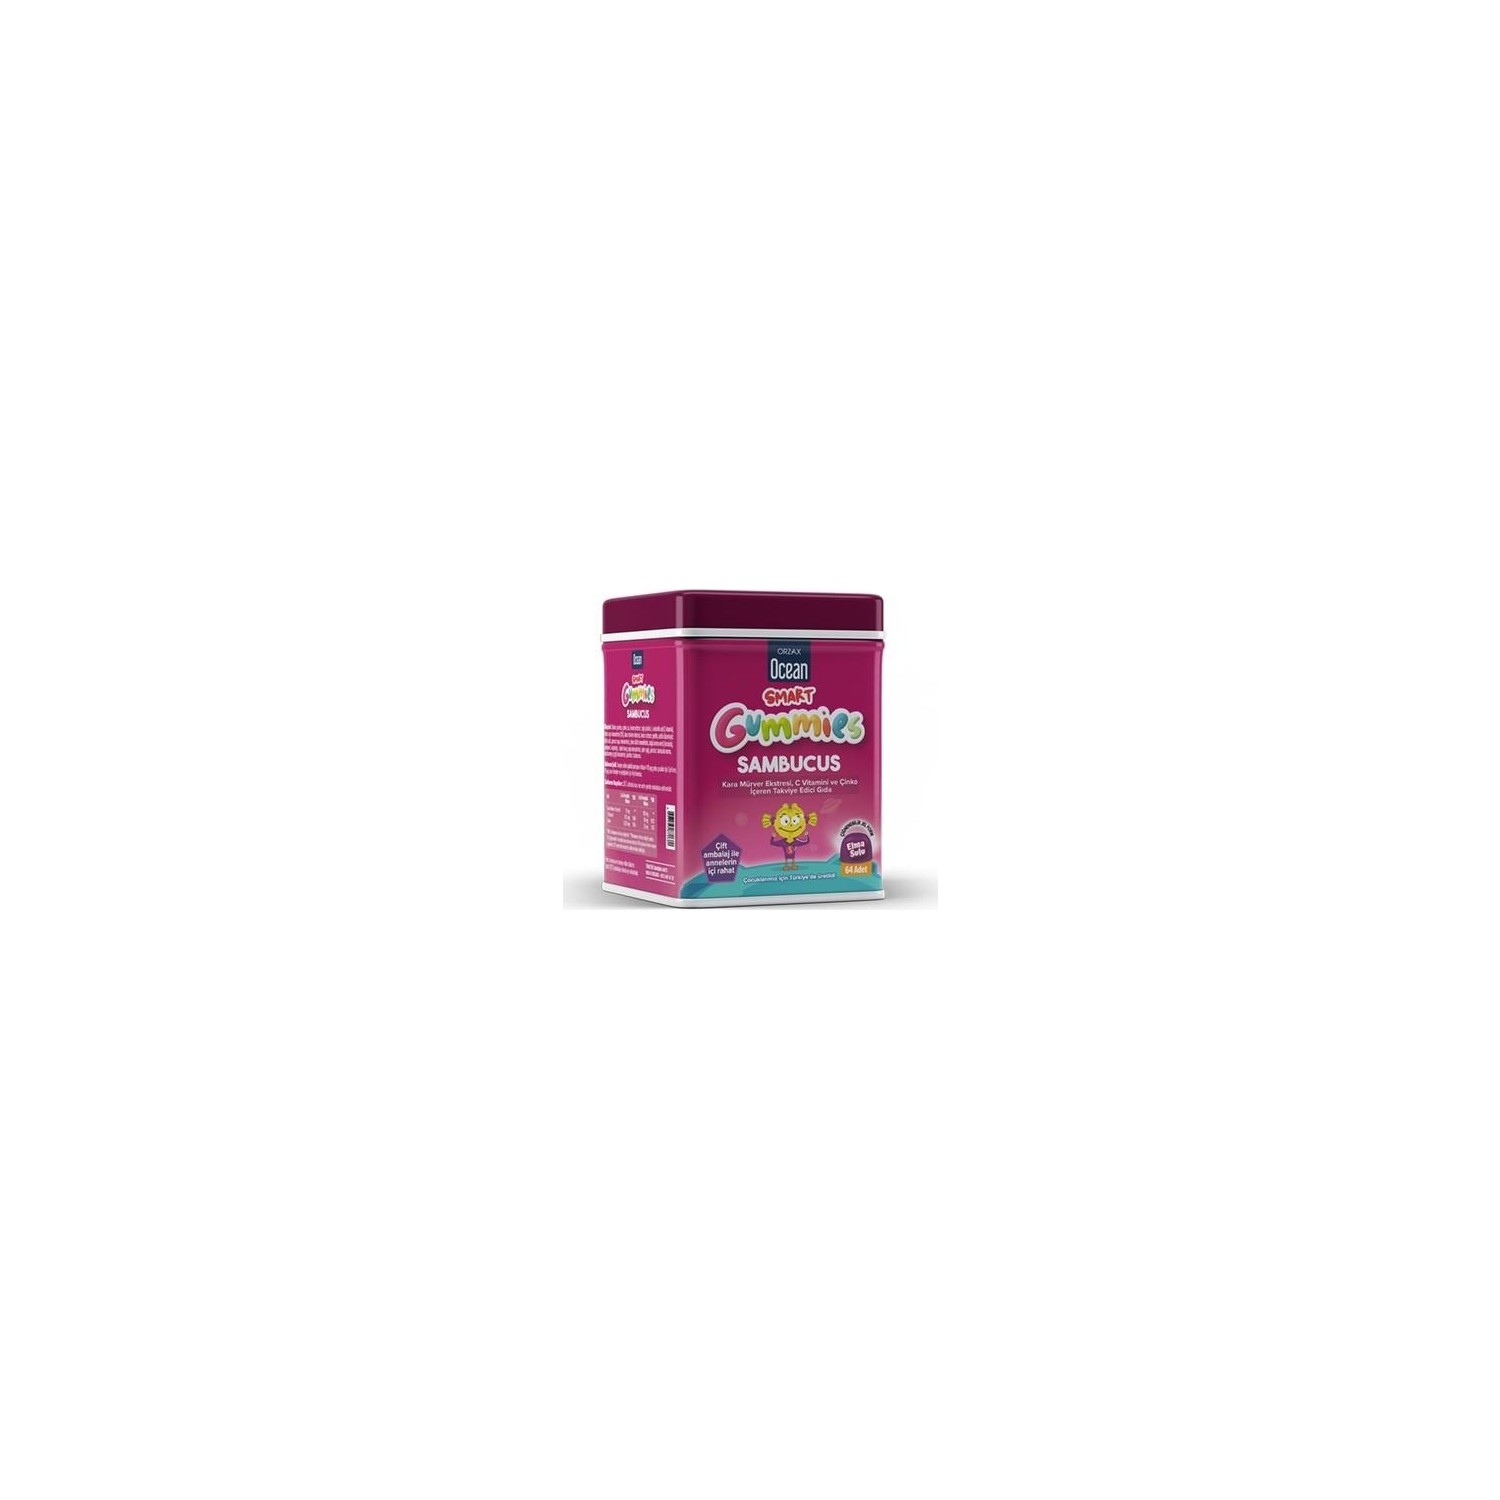 Мультивитамины Orzax Smart Gummies Sambucus, 64 таблетки цена и фото